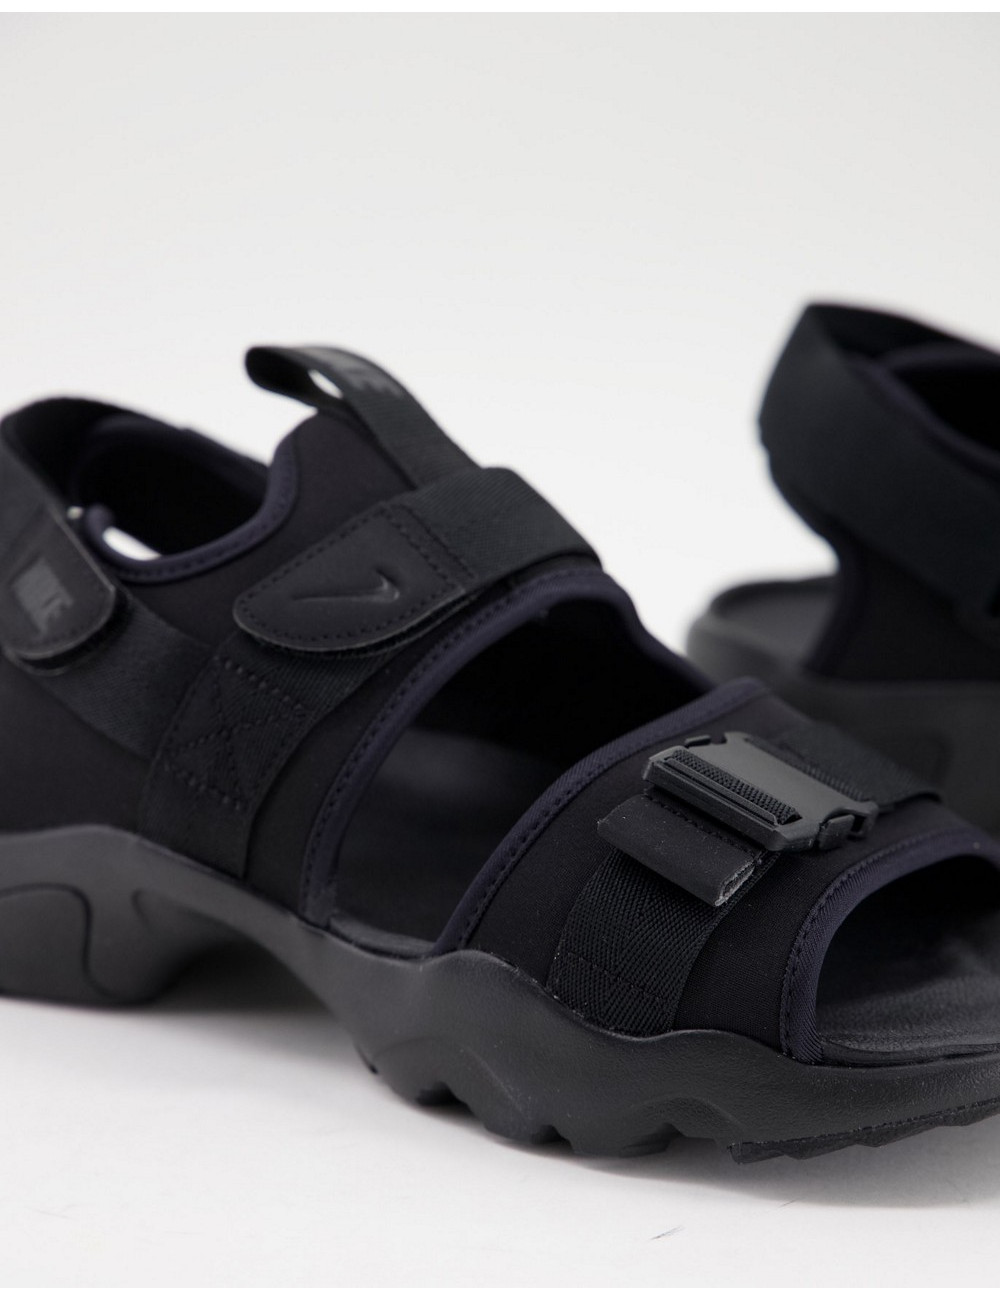 Nike Canyon sandal in black